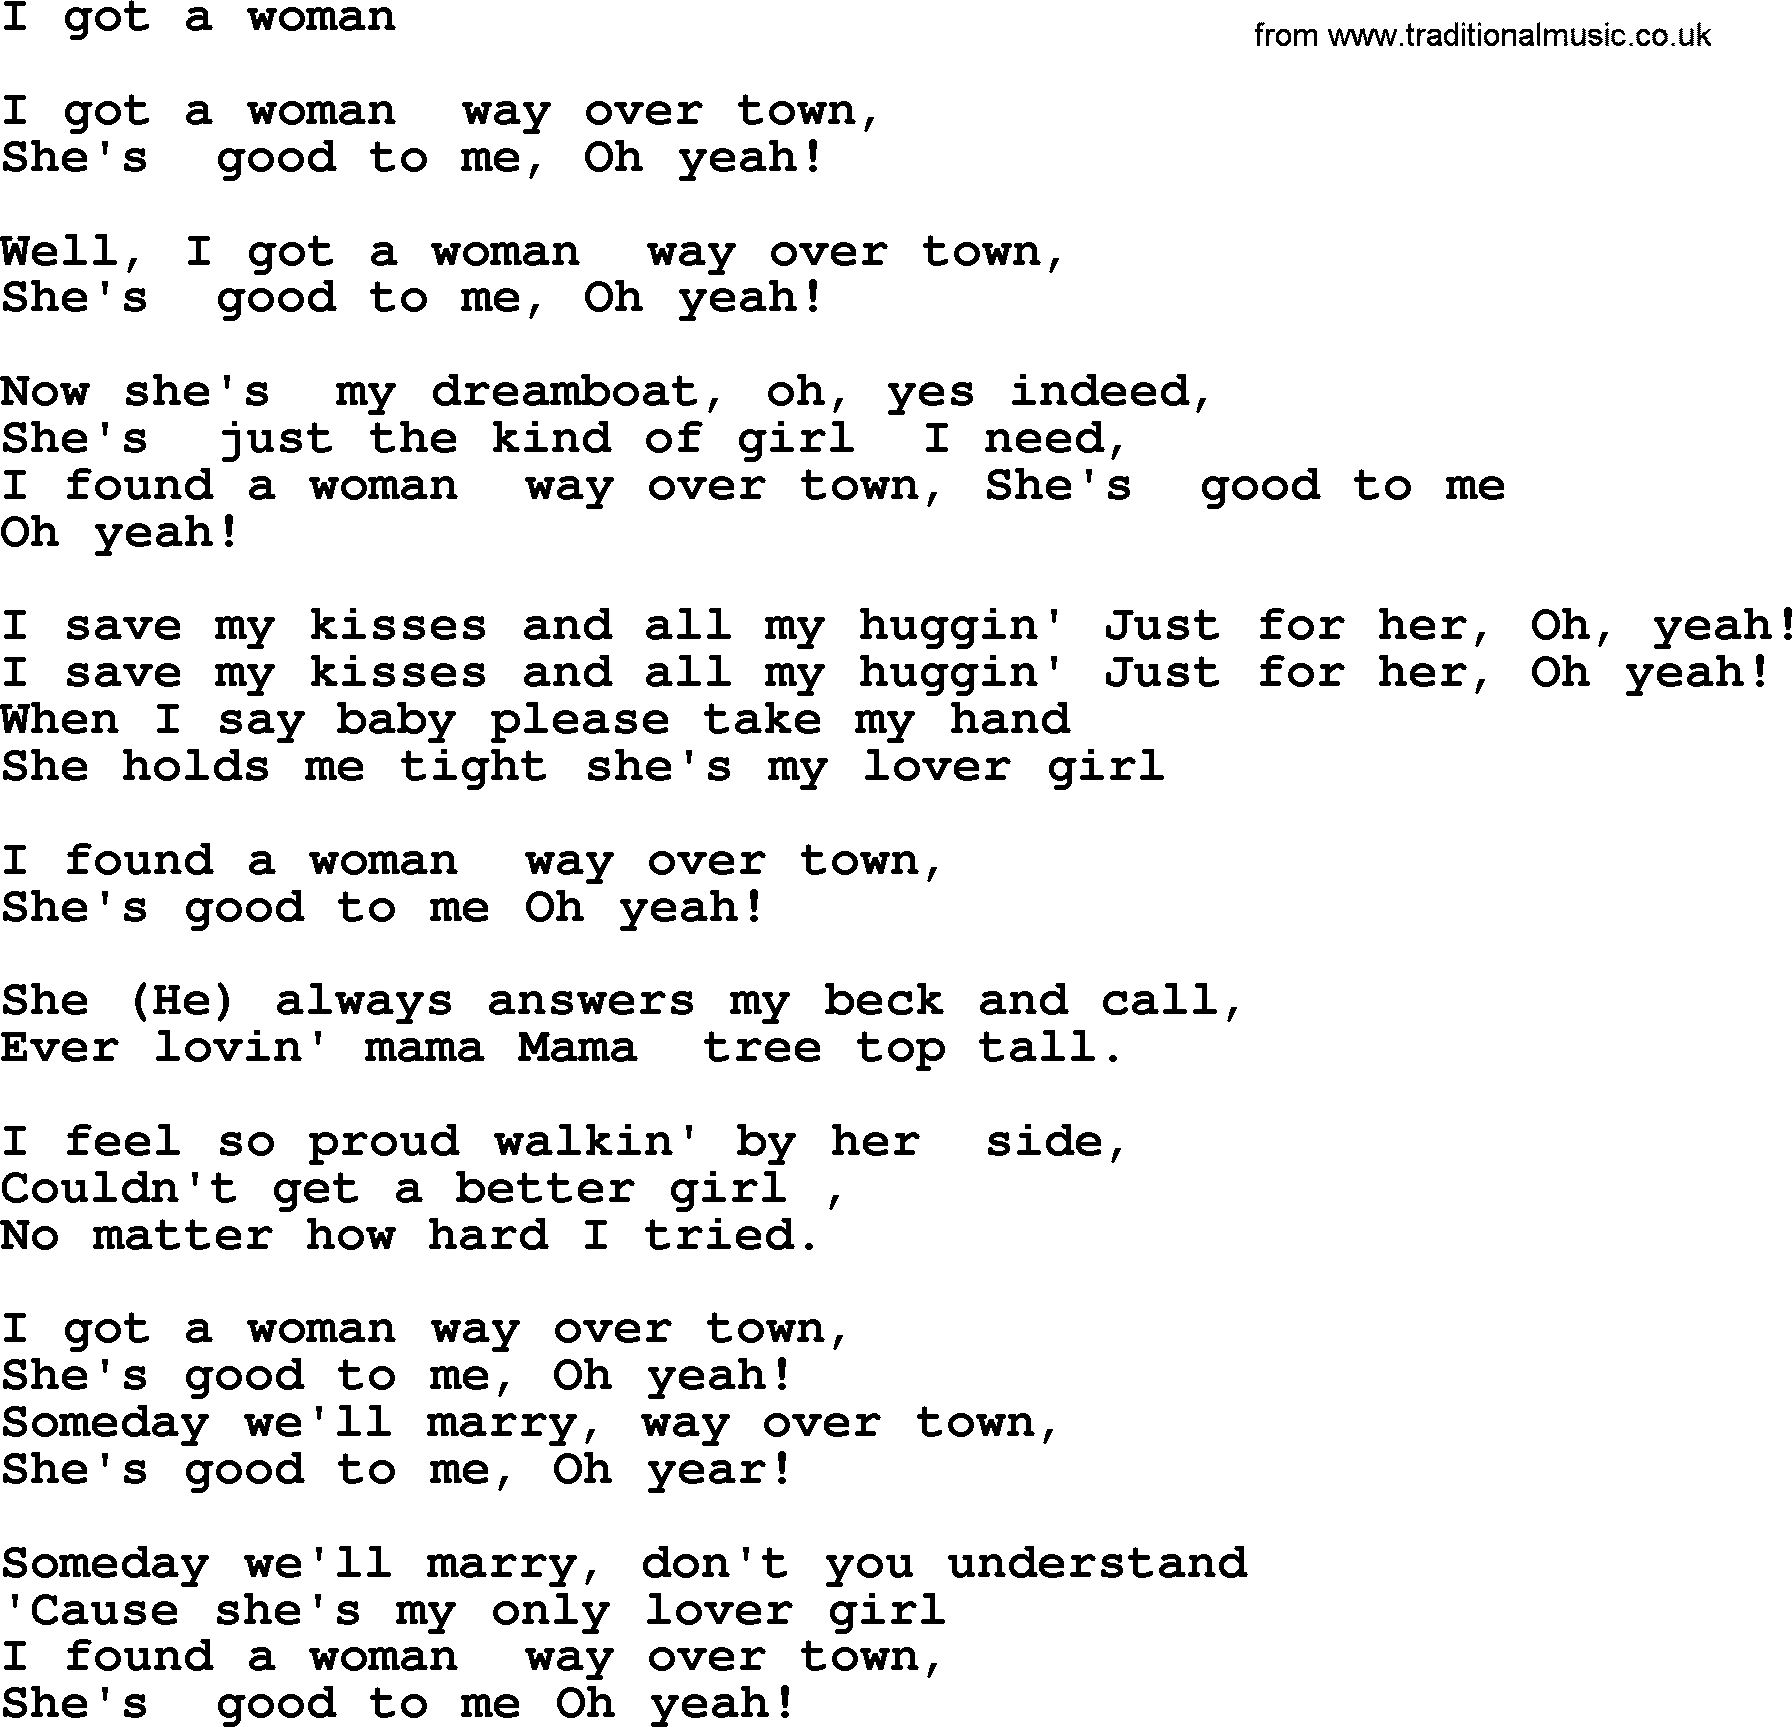 Bruce Springsteen song: I Got A Woman lyrics